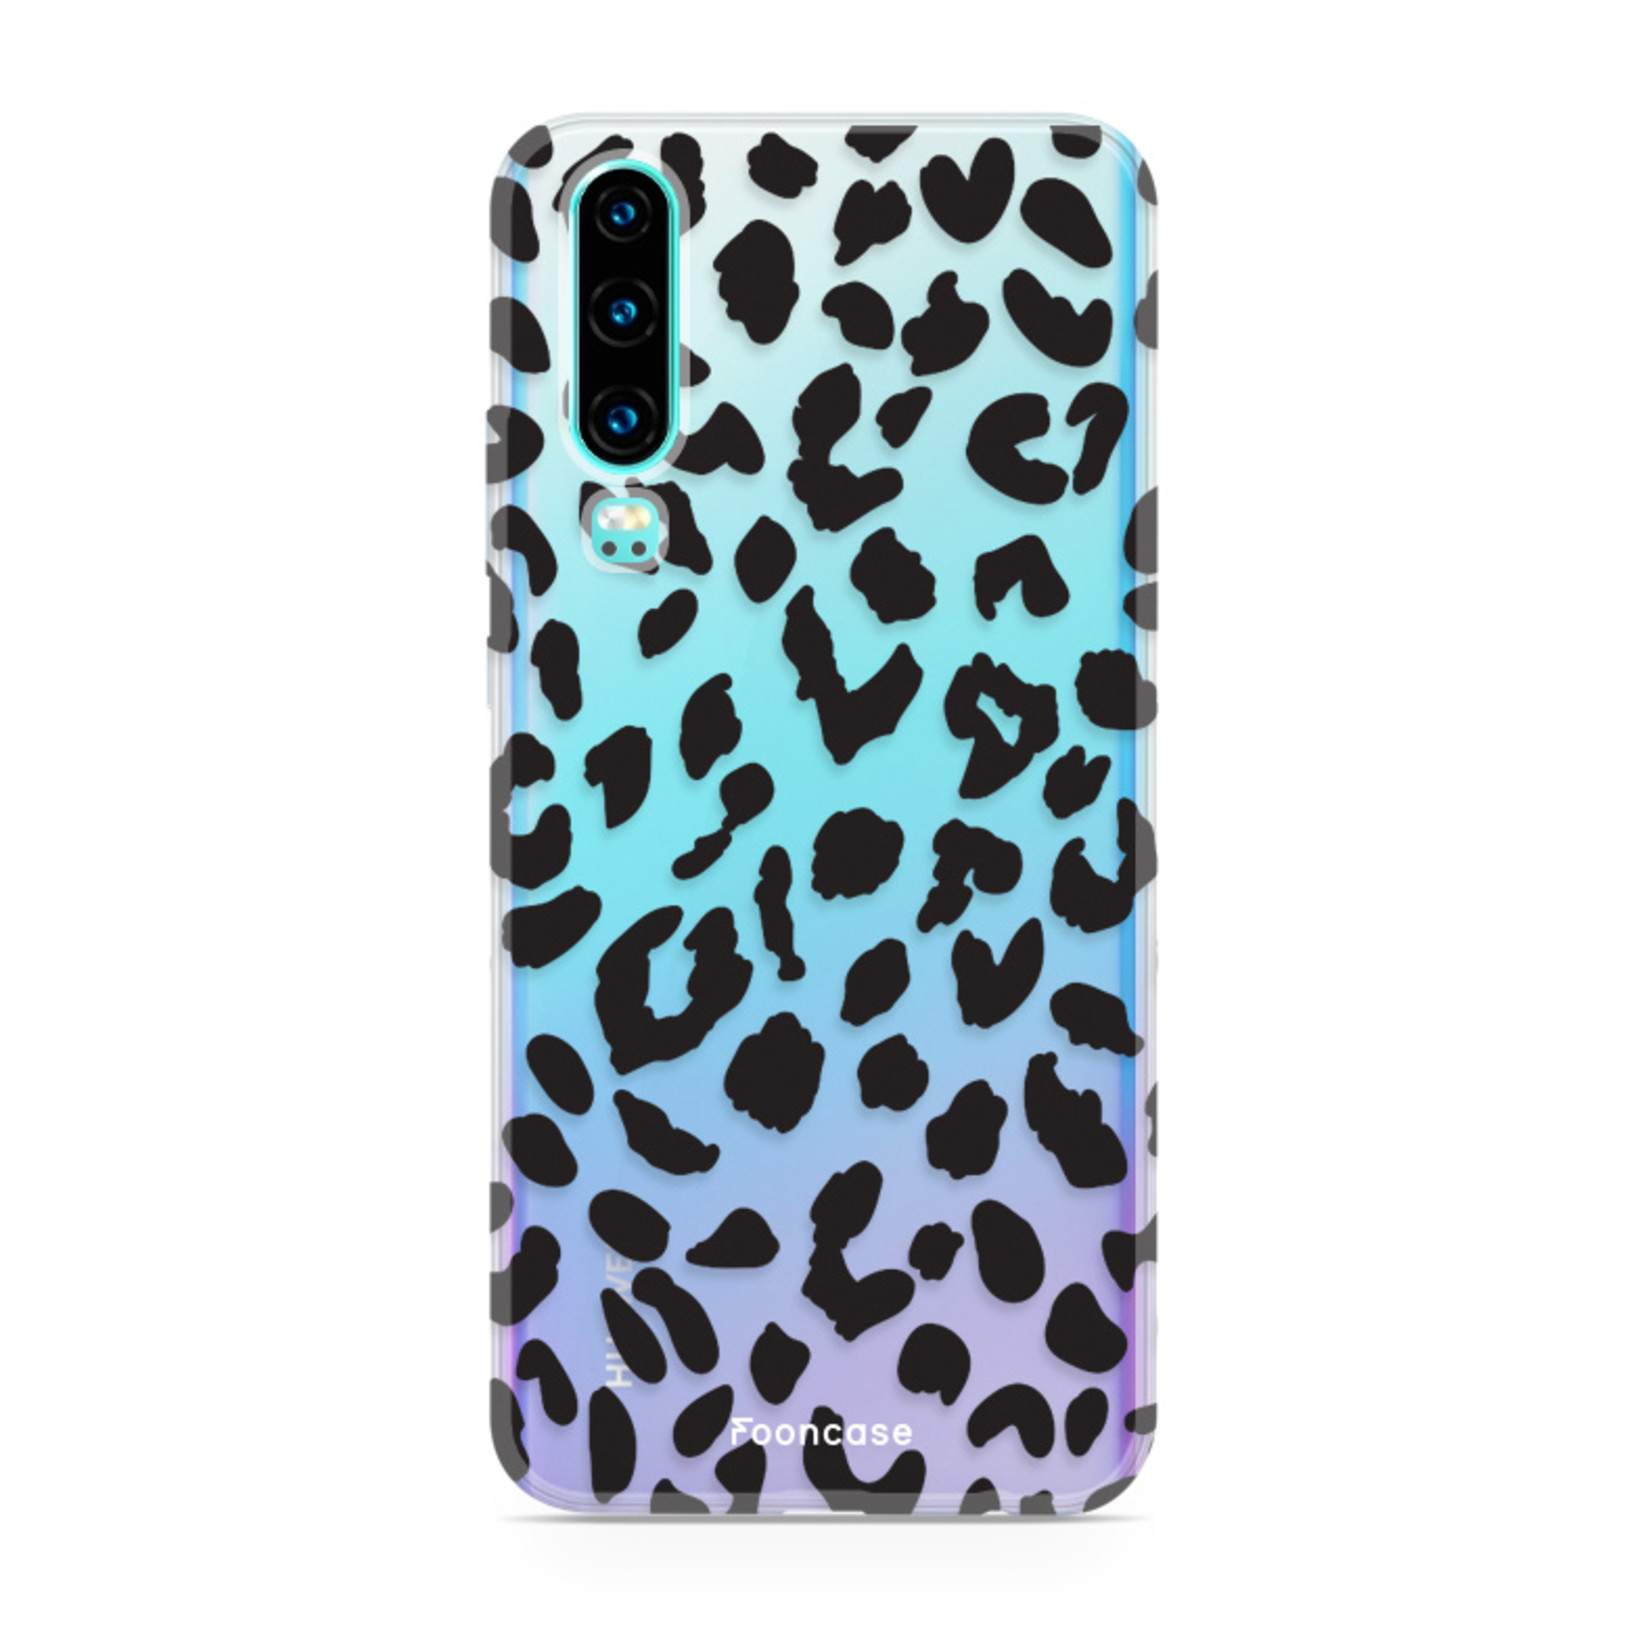 FOONCASE Huawei P30 hoesje TPU Soft Case - Back Cover - Luipaard / Leopard print